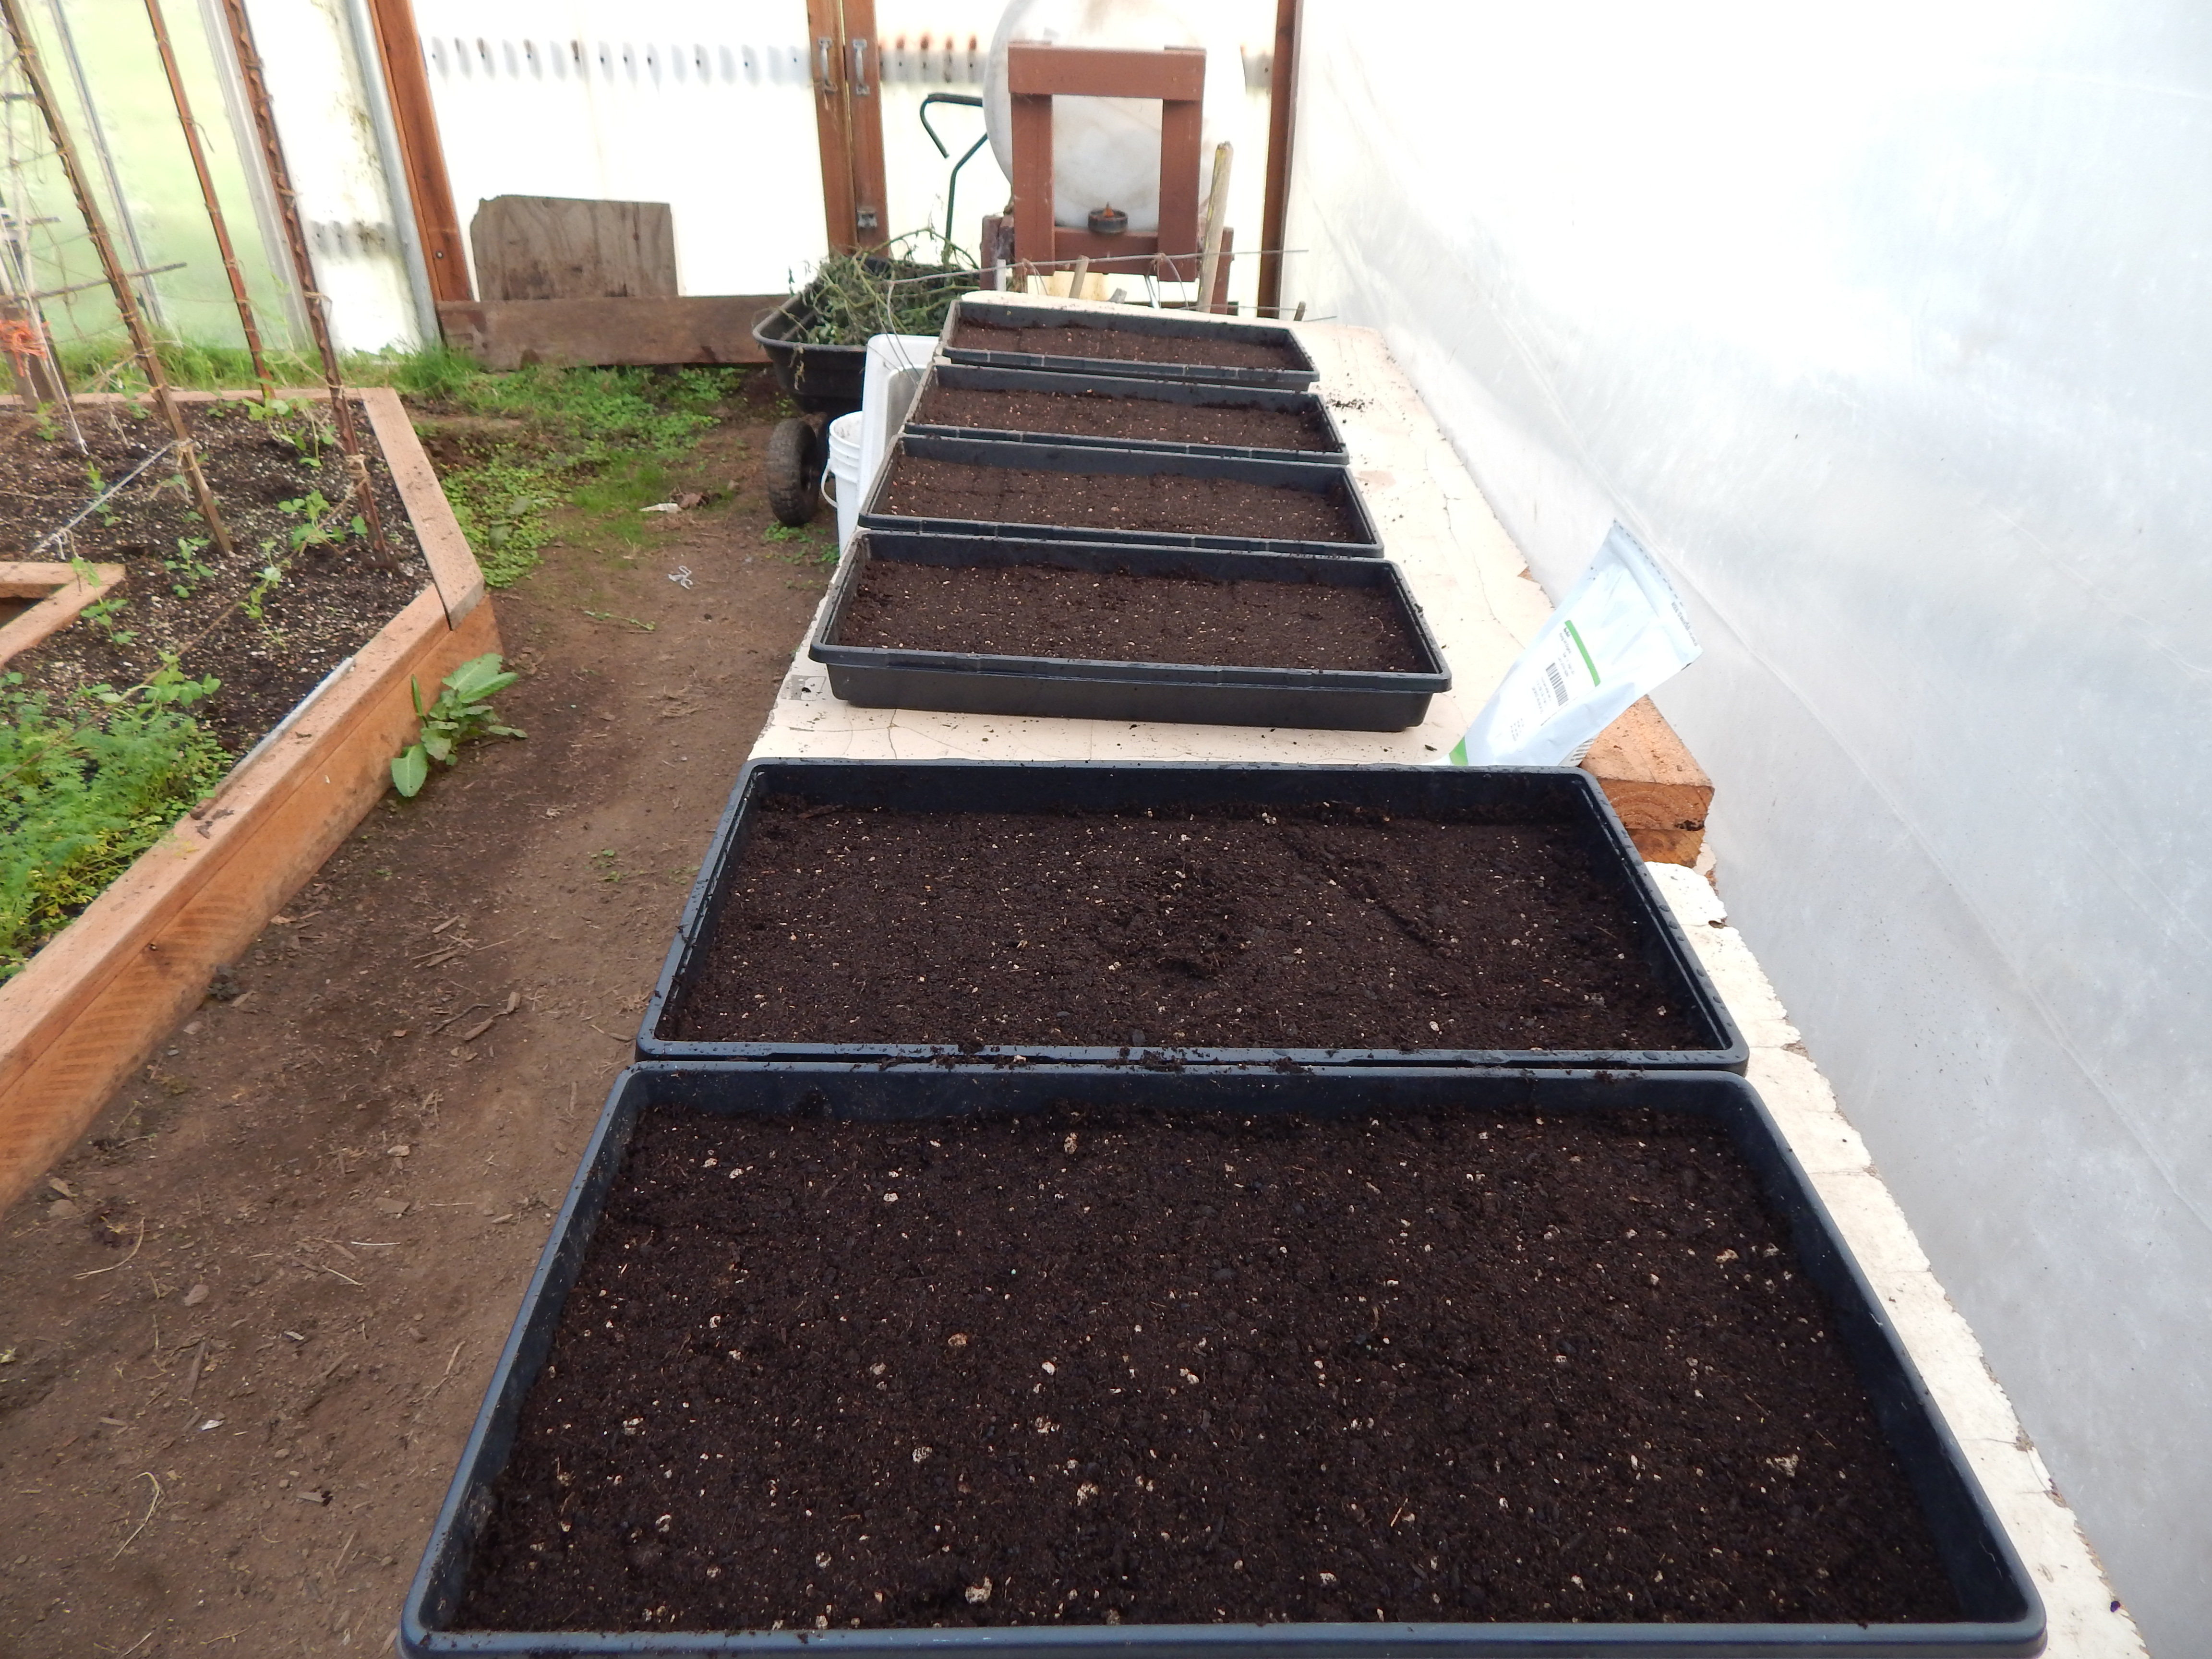 Soil filled trays